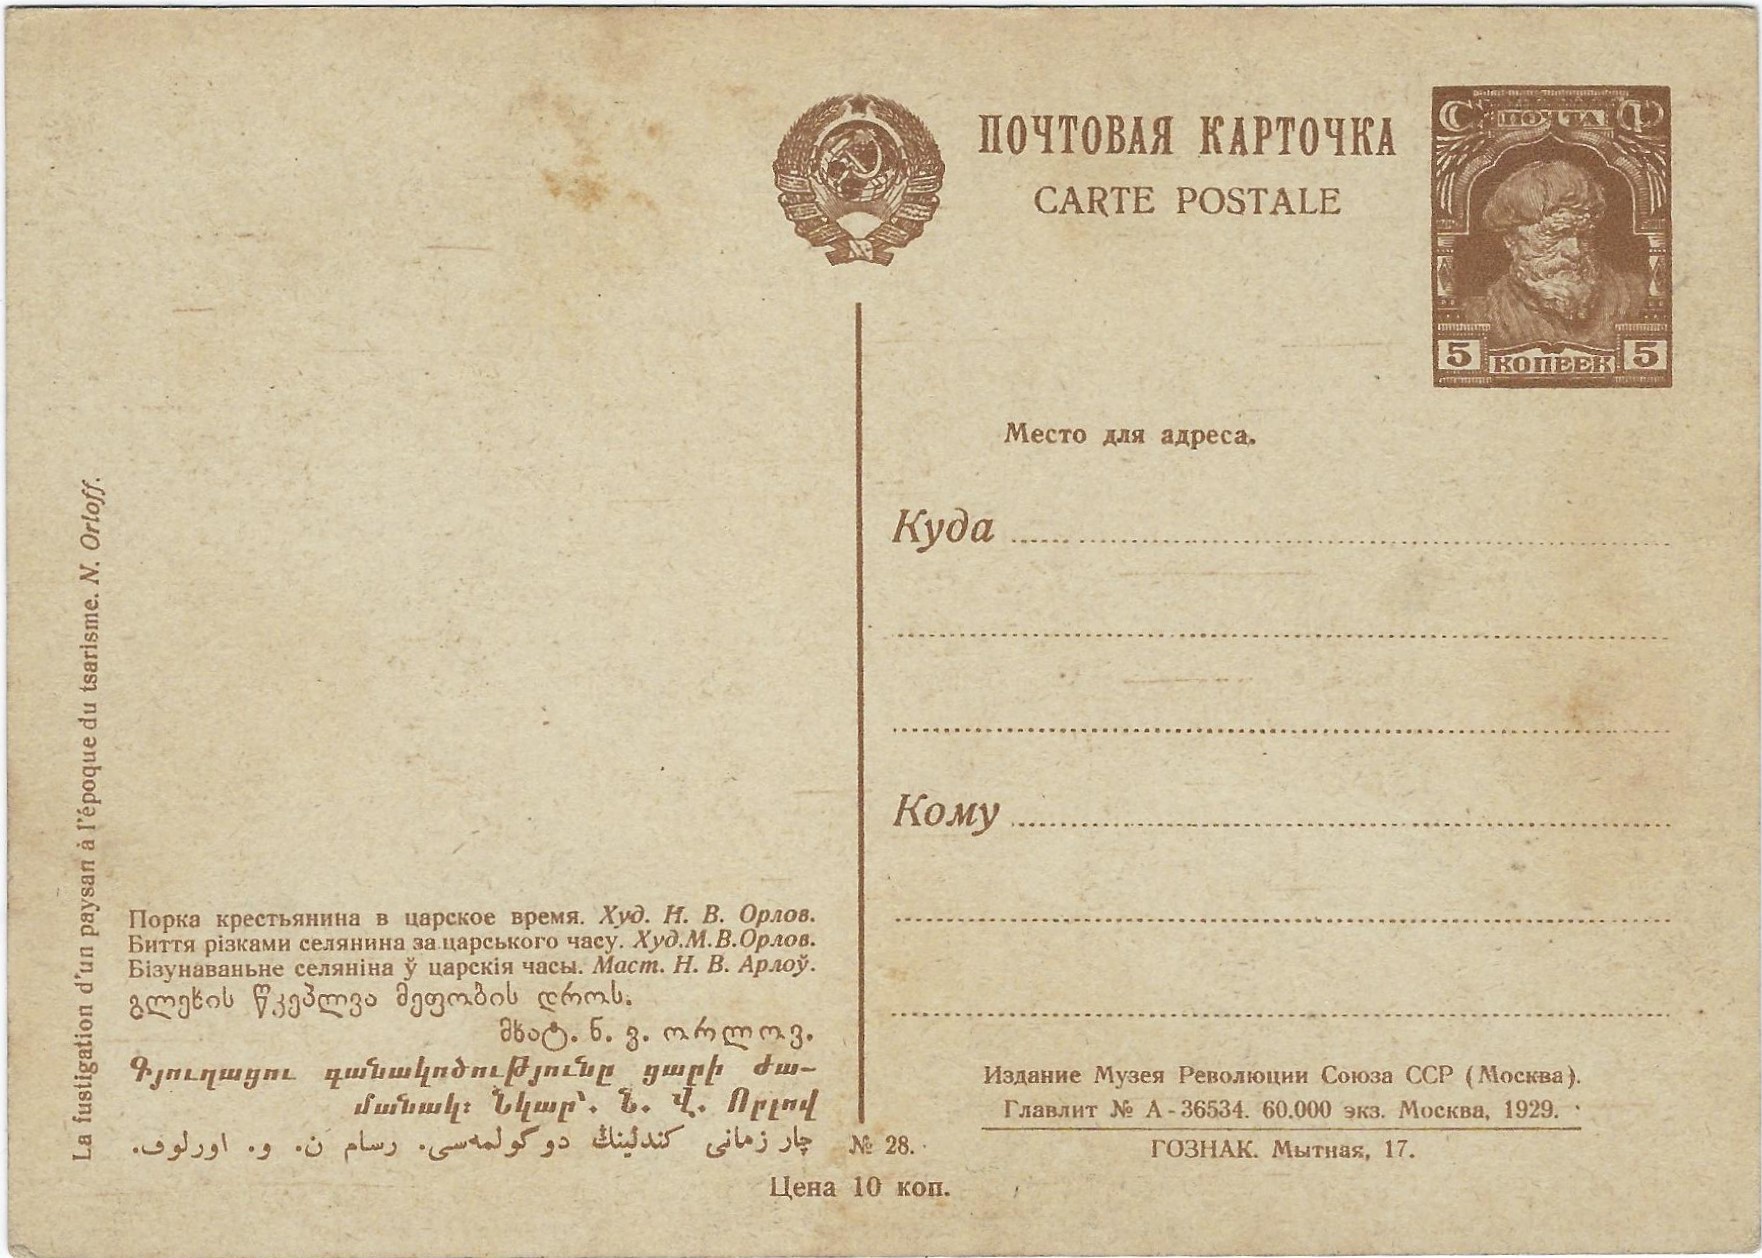 Postal Stationery - Soviet Union Museum of Revolution issue Scott 2200a 